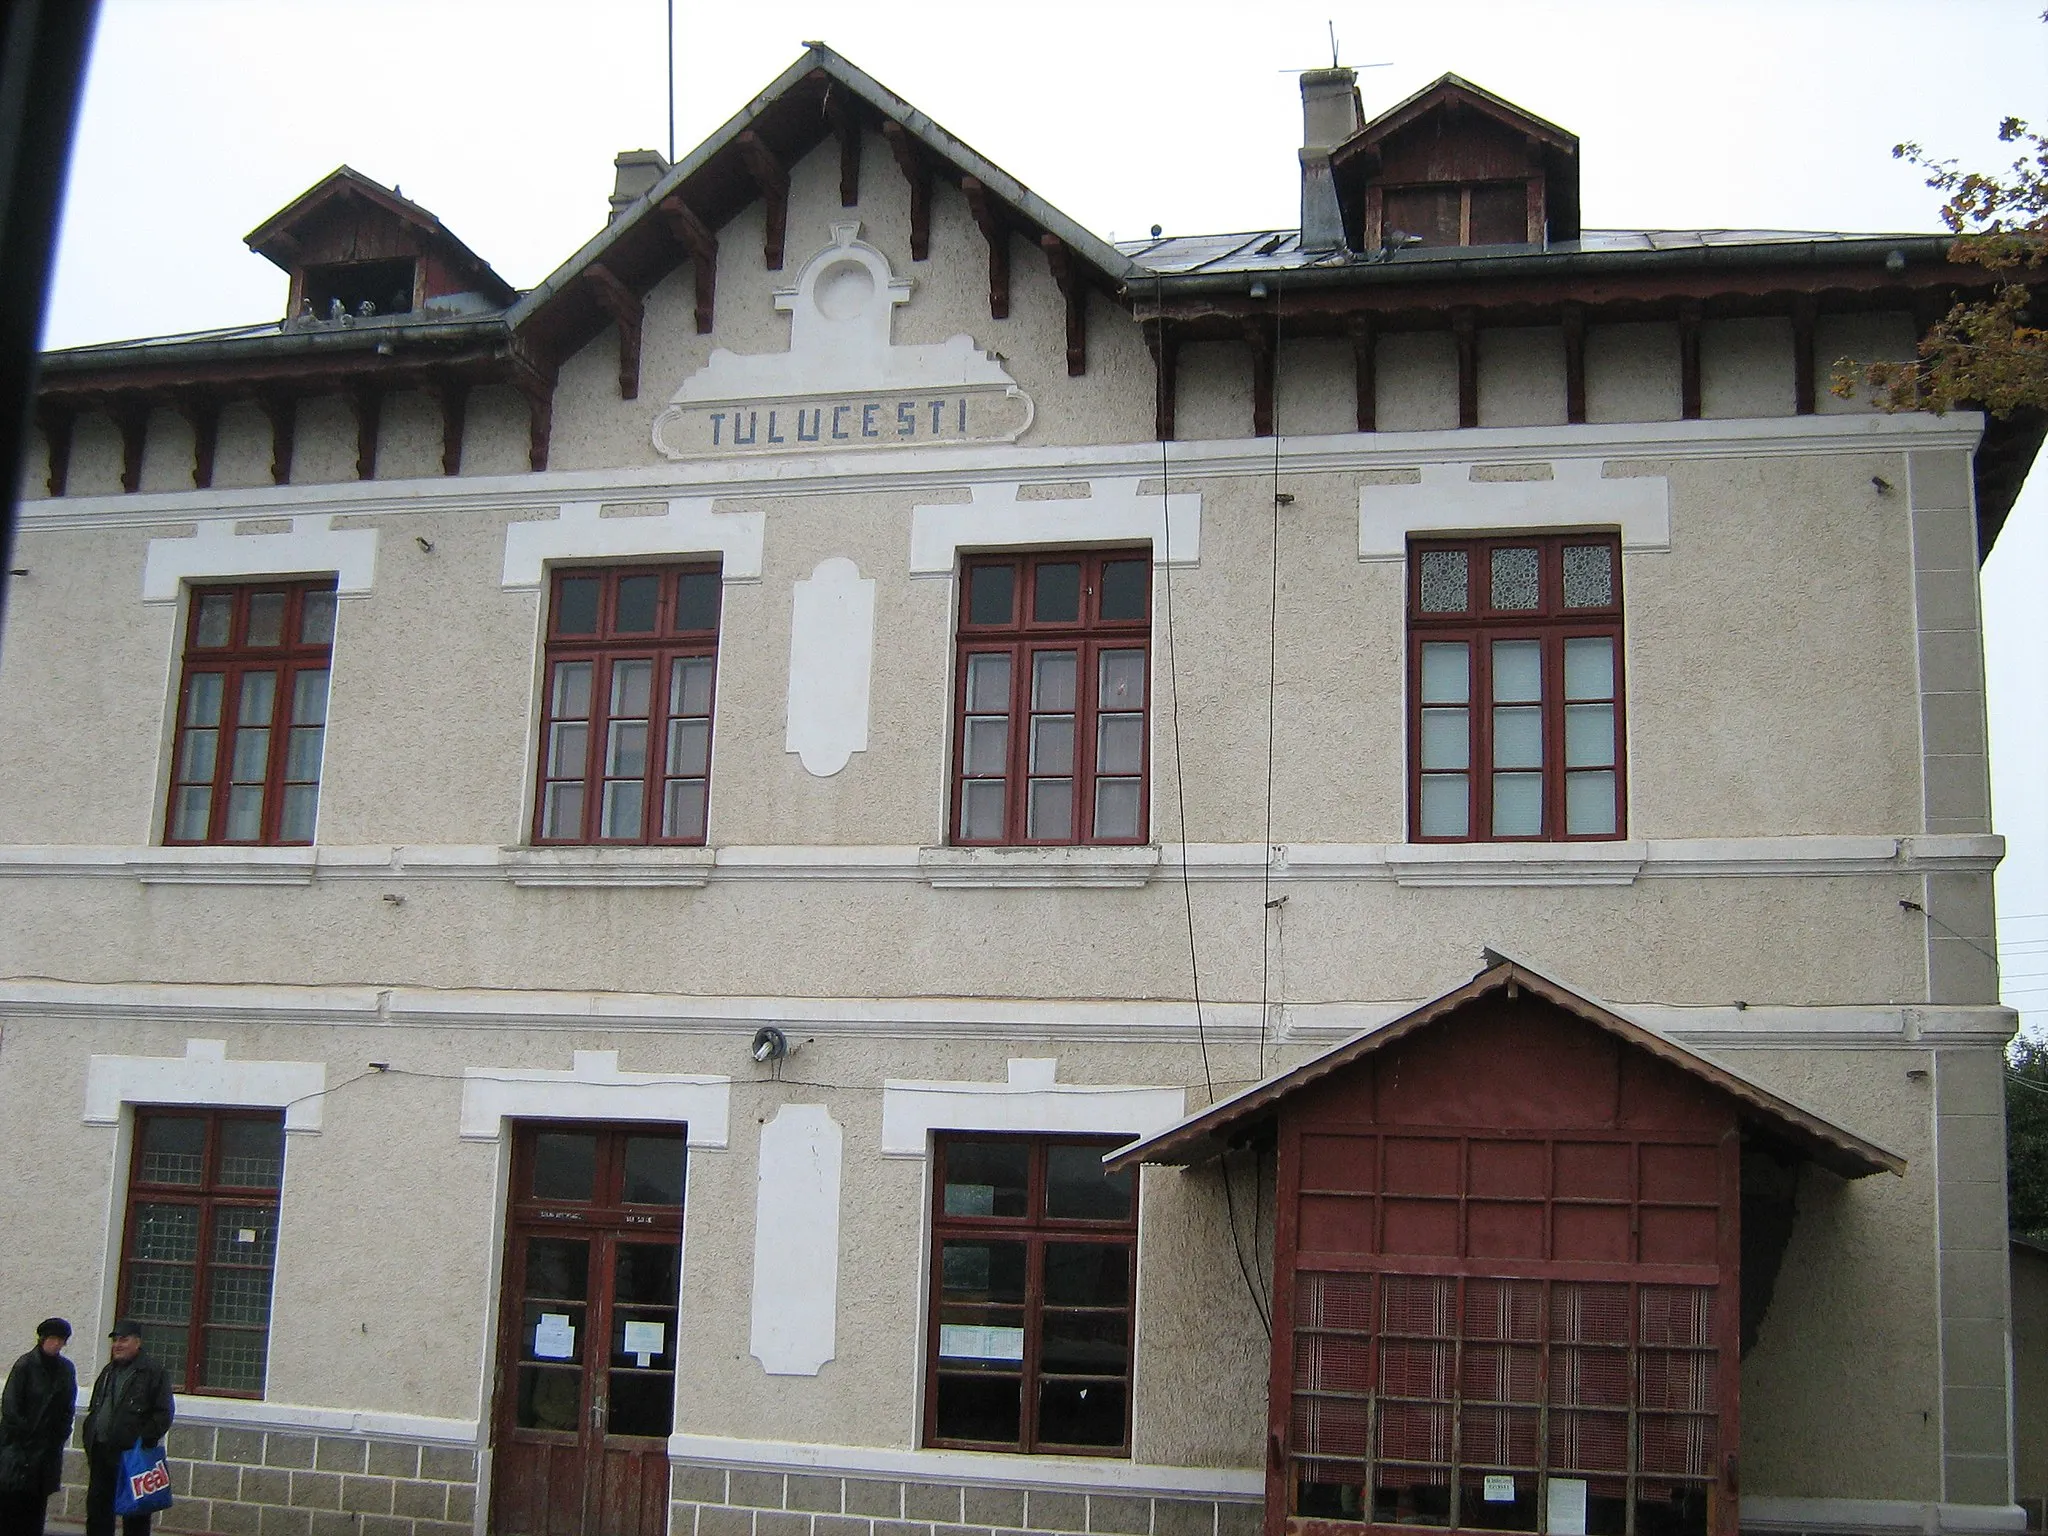 Photo showing: Tulucesti, Galati, Romania - the train station